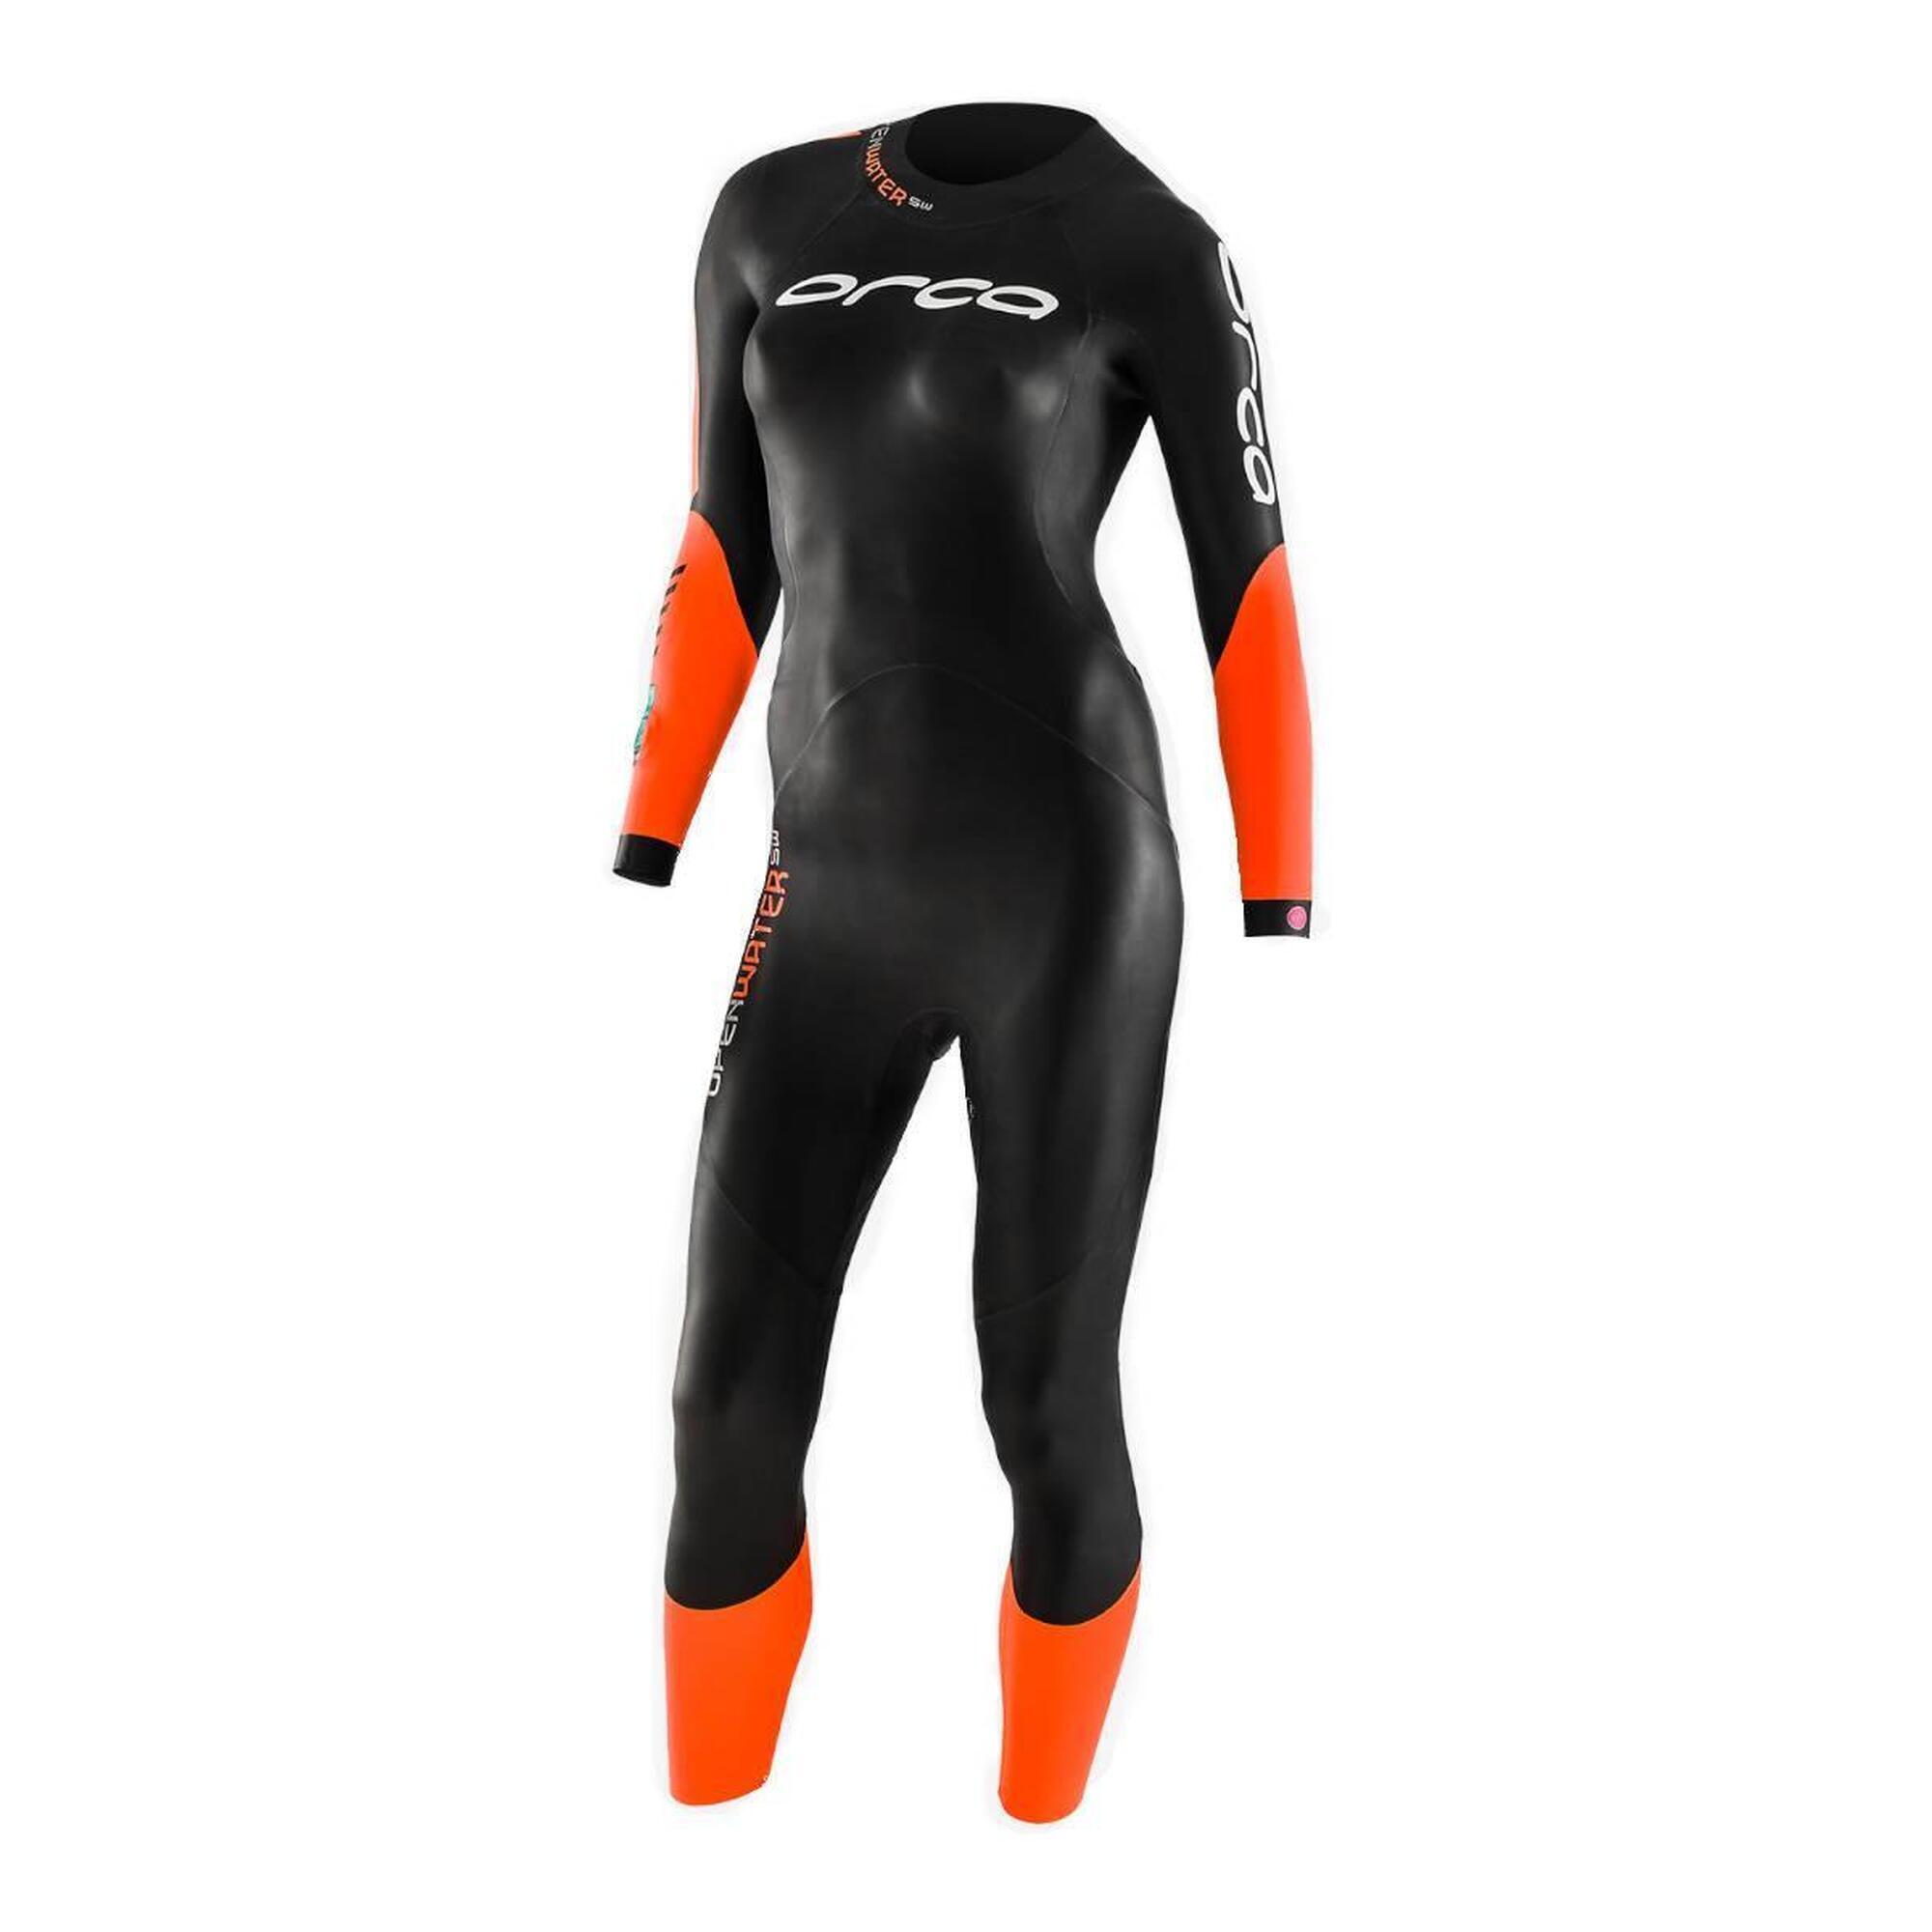 ORCA Orca Women's Openwater Smart Wetsuit - Black/ Orange - Size S